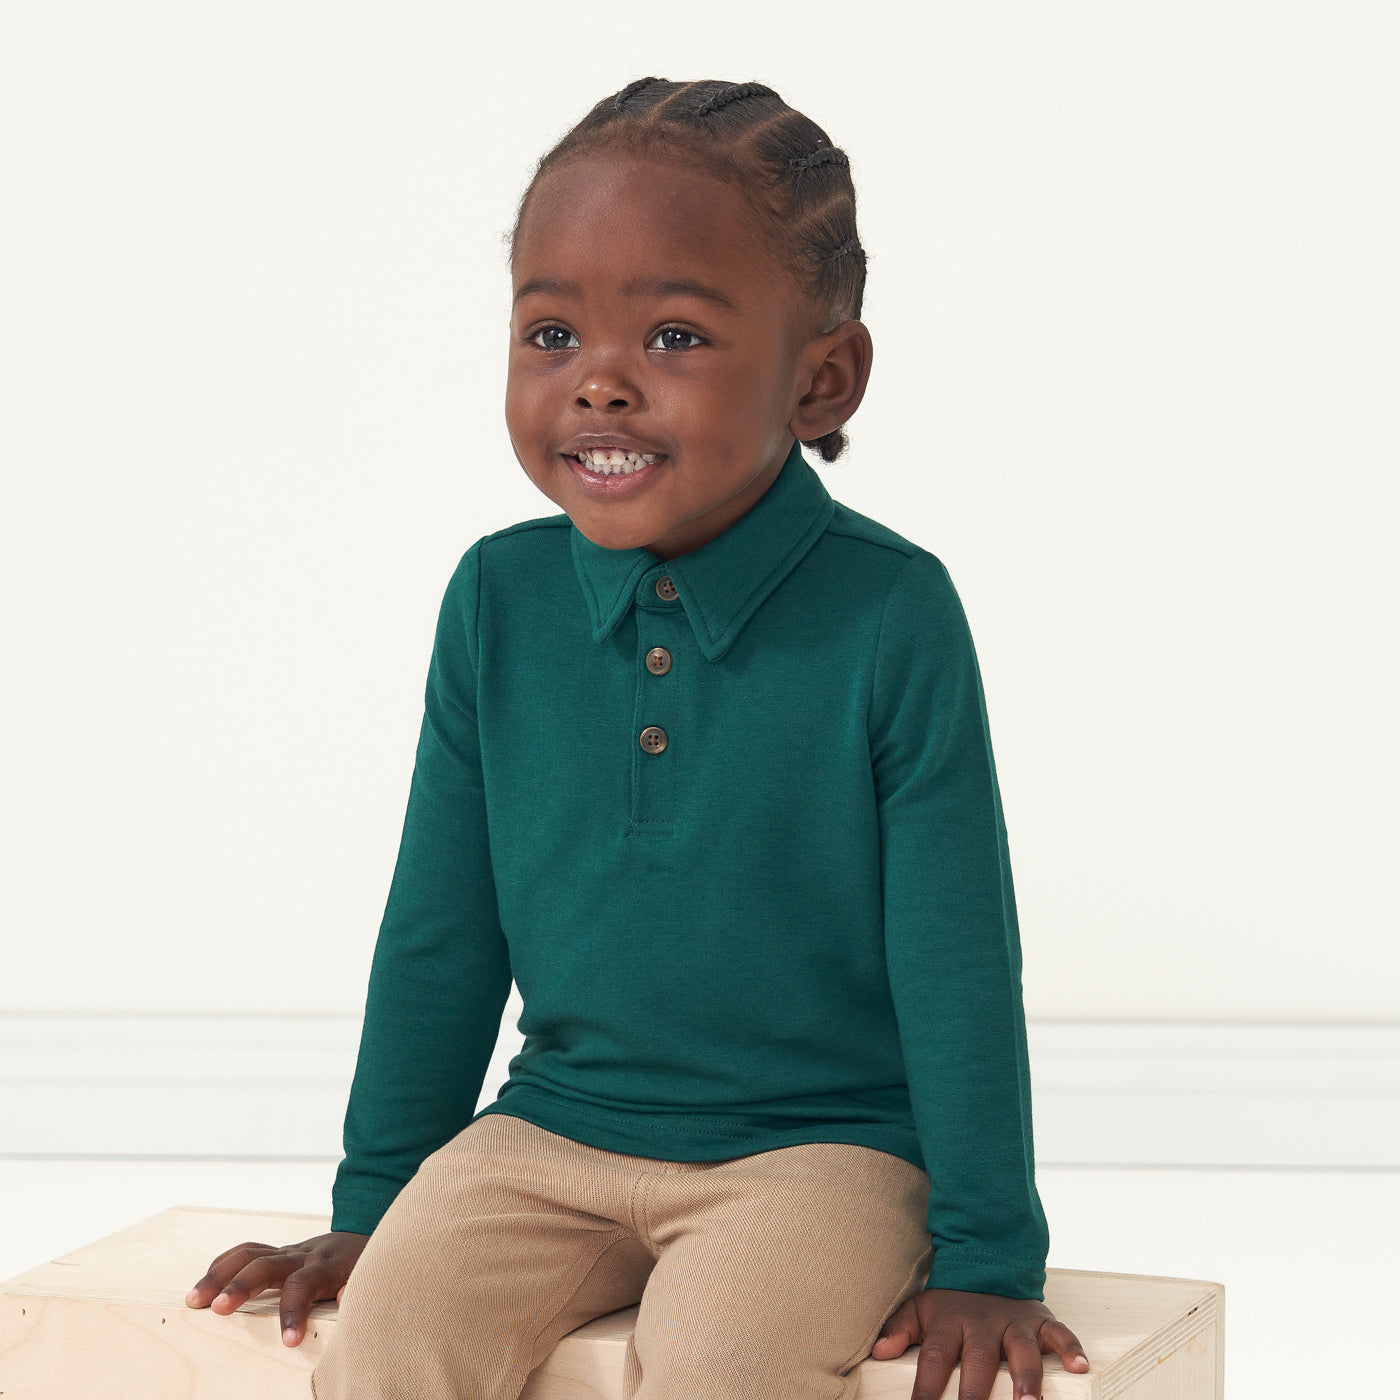 Child sitting wearing an Emerald polo shirt